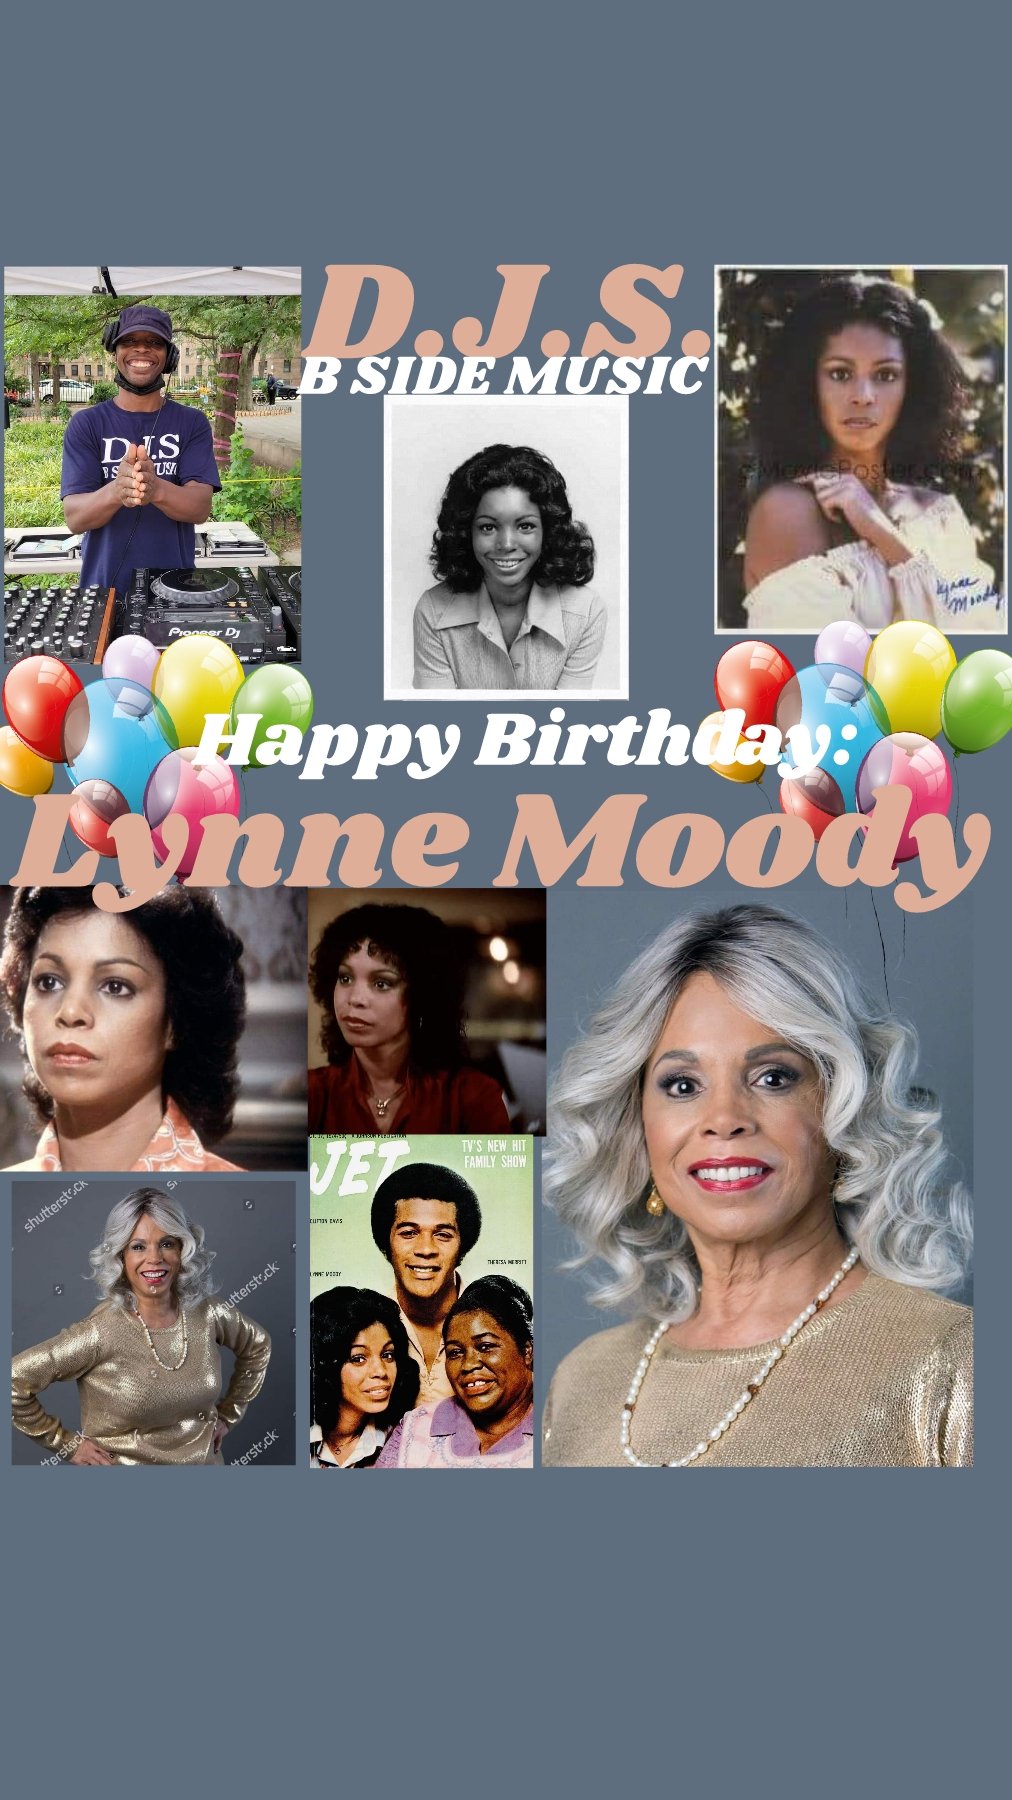 I(D.J.S.) wish Television Actress/Film: \"LYNNE MOODY\" Happy Birthday!!! 